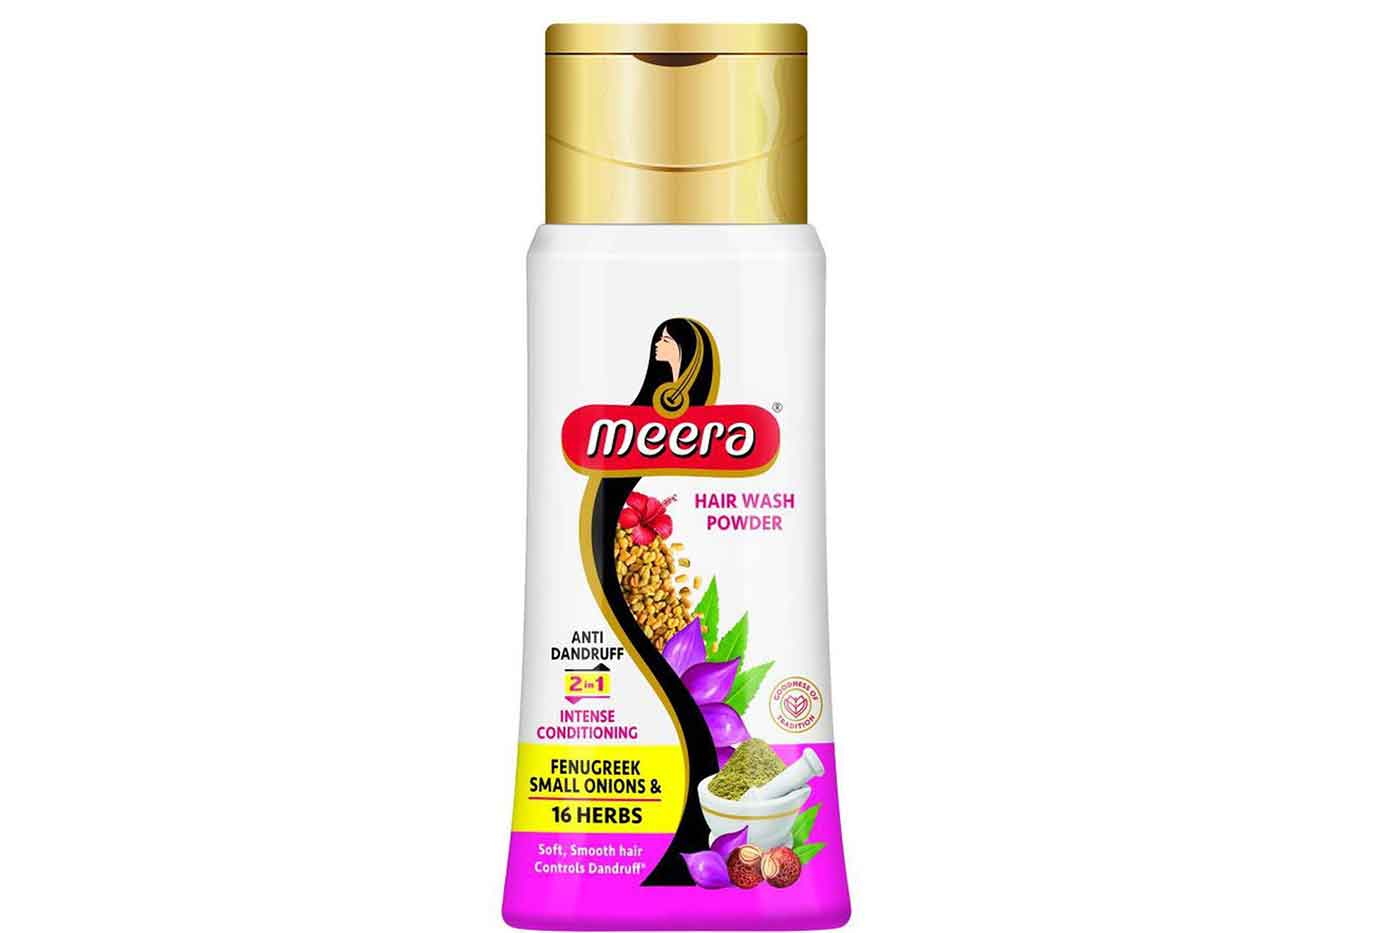 CavinKare releases onion hair wash powder under brand Meera